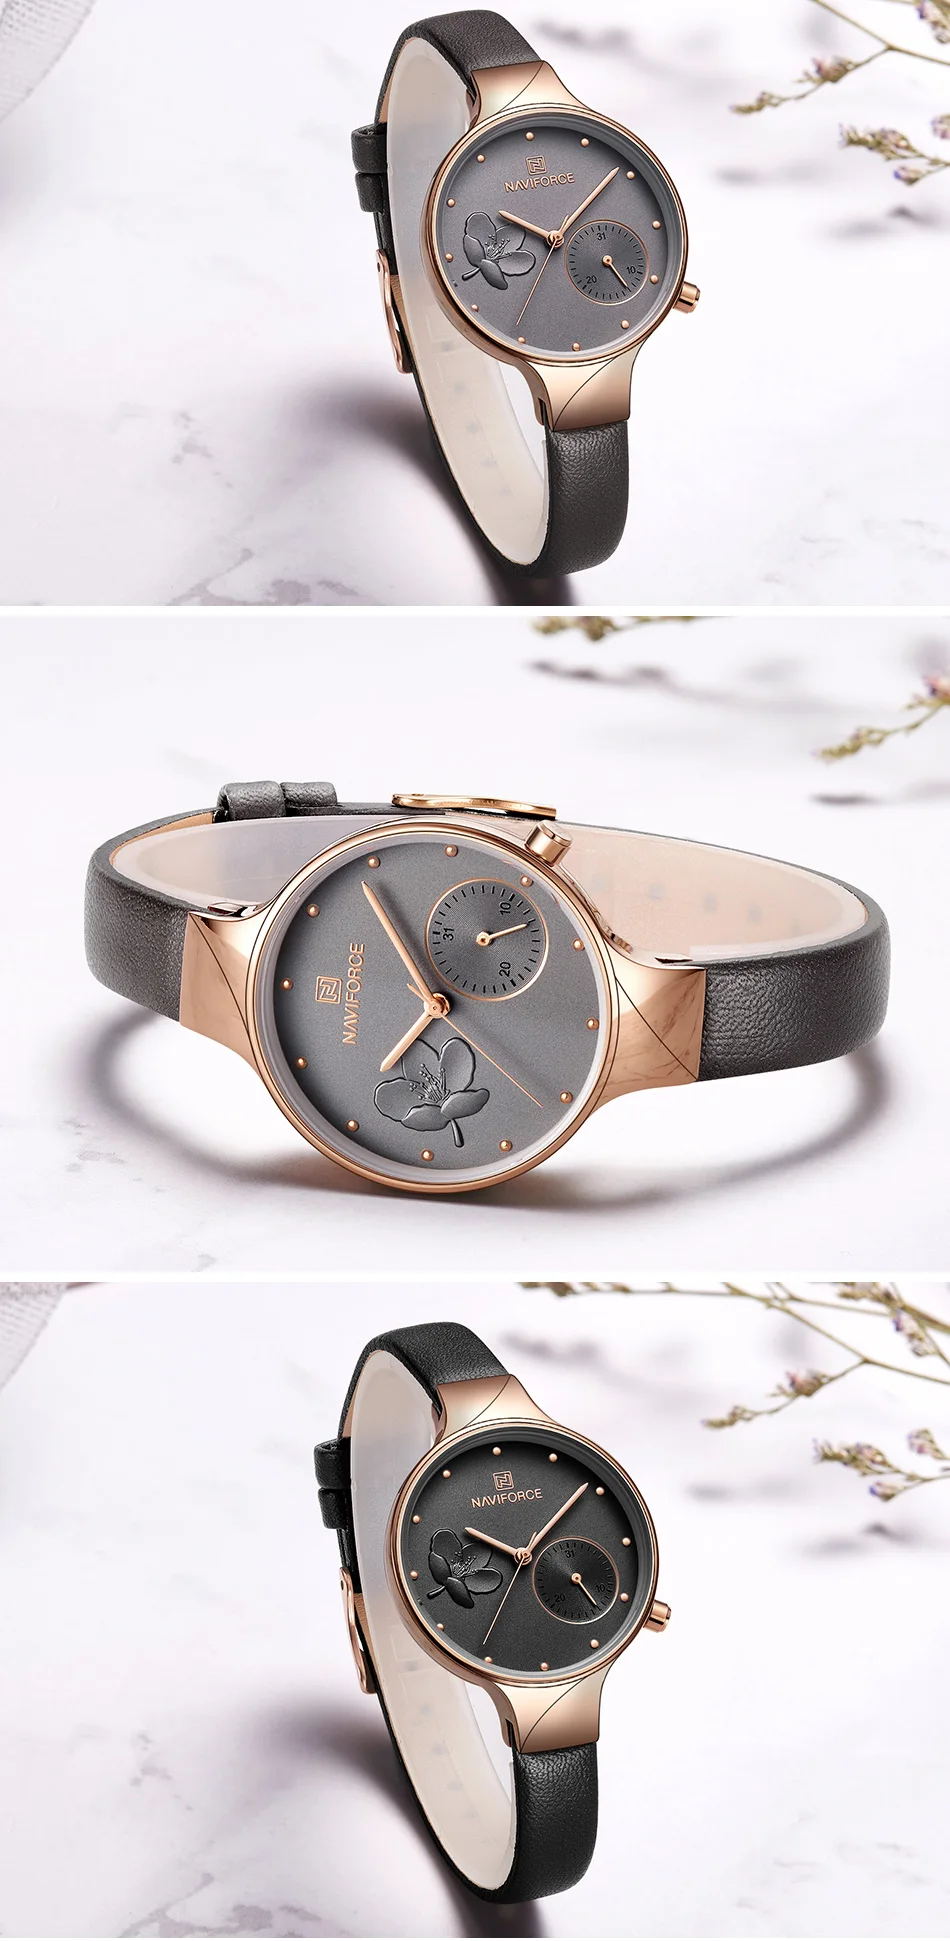 NAVIFORCE женские часы лучший бренд класса люкс Модные женские кварцевые наручные часы женские кожаные водонепроницаемые часы девушка Relogio Feminino